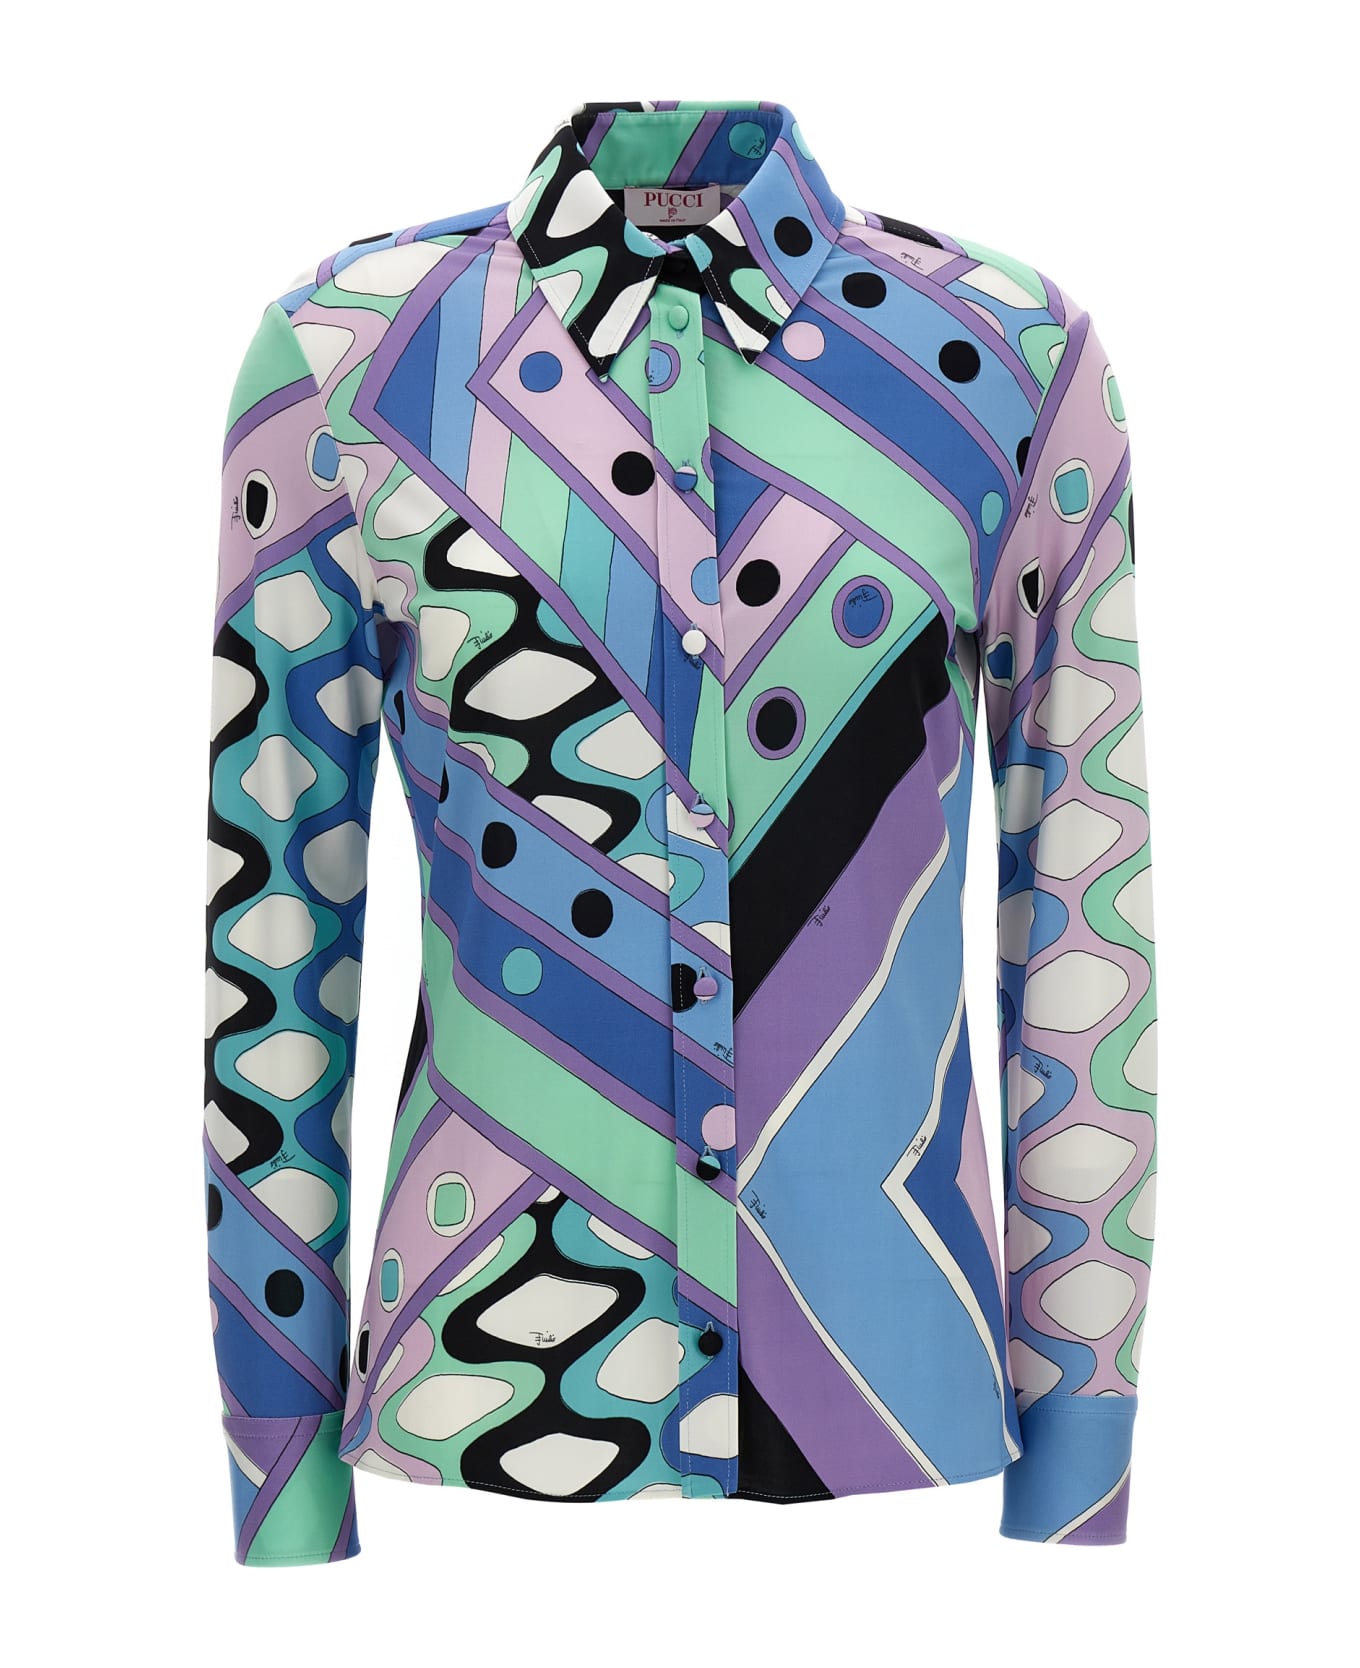 Pucci 'vivara' Shirt - CELESTE/BIANCO シャツ